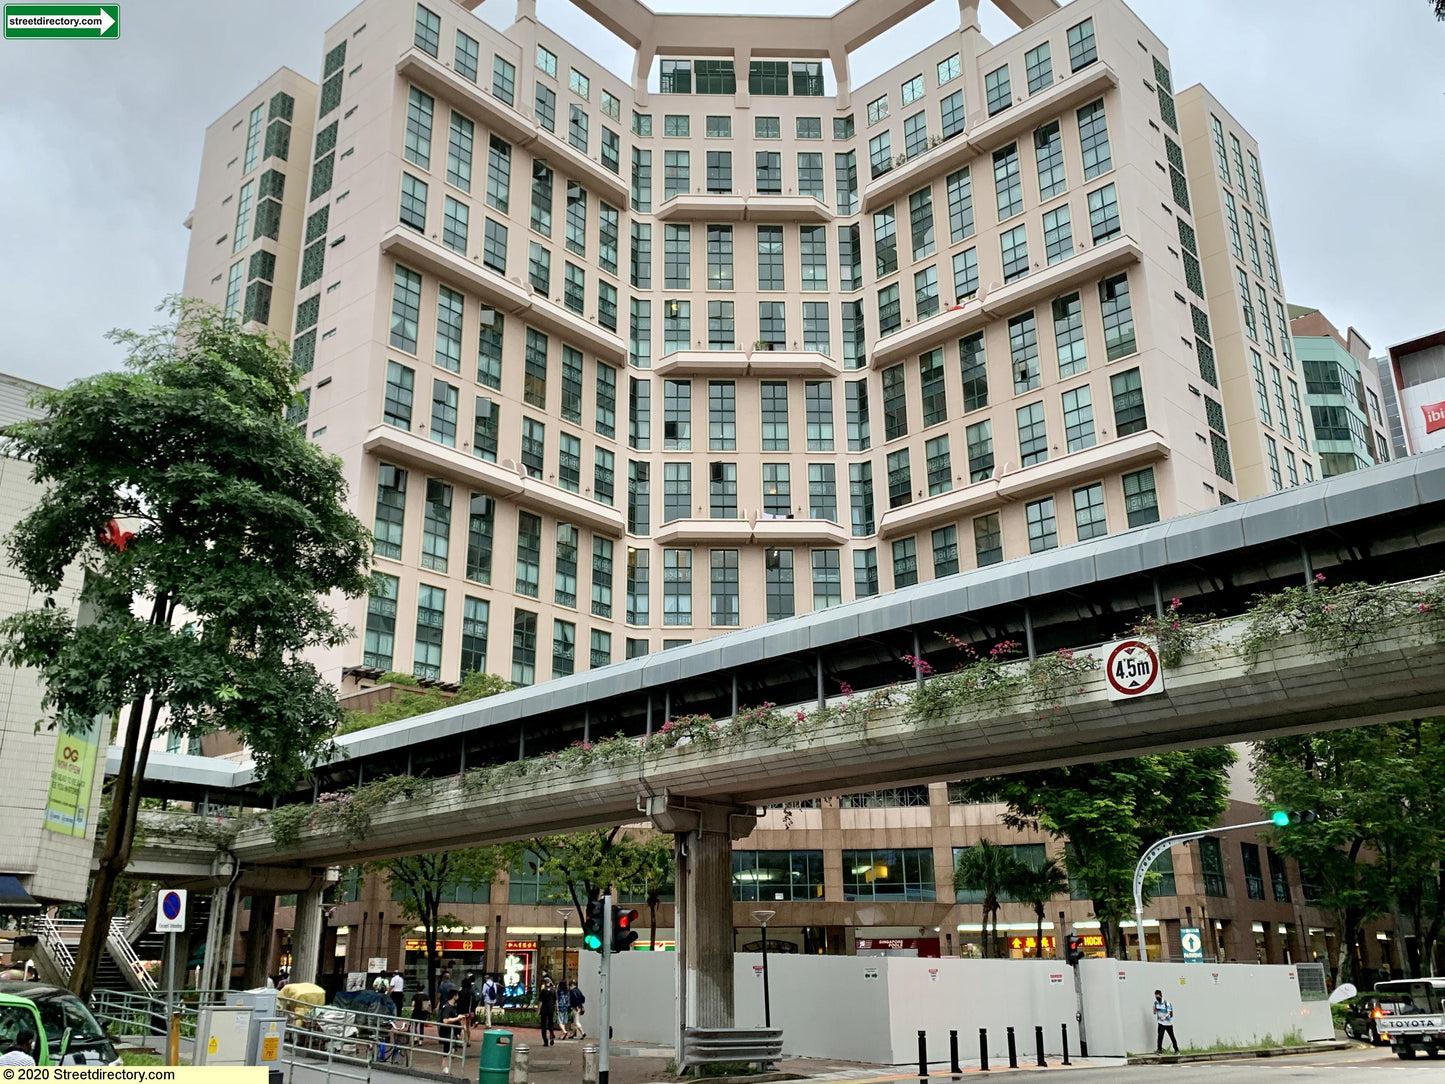 Bugis: Singapore’s Charming Mix of Hotels, Shops, Books, Bars and Restaurants